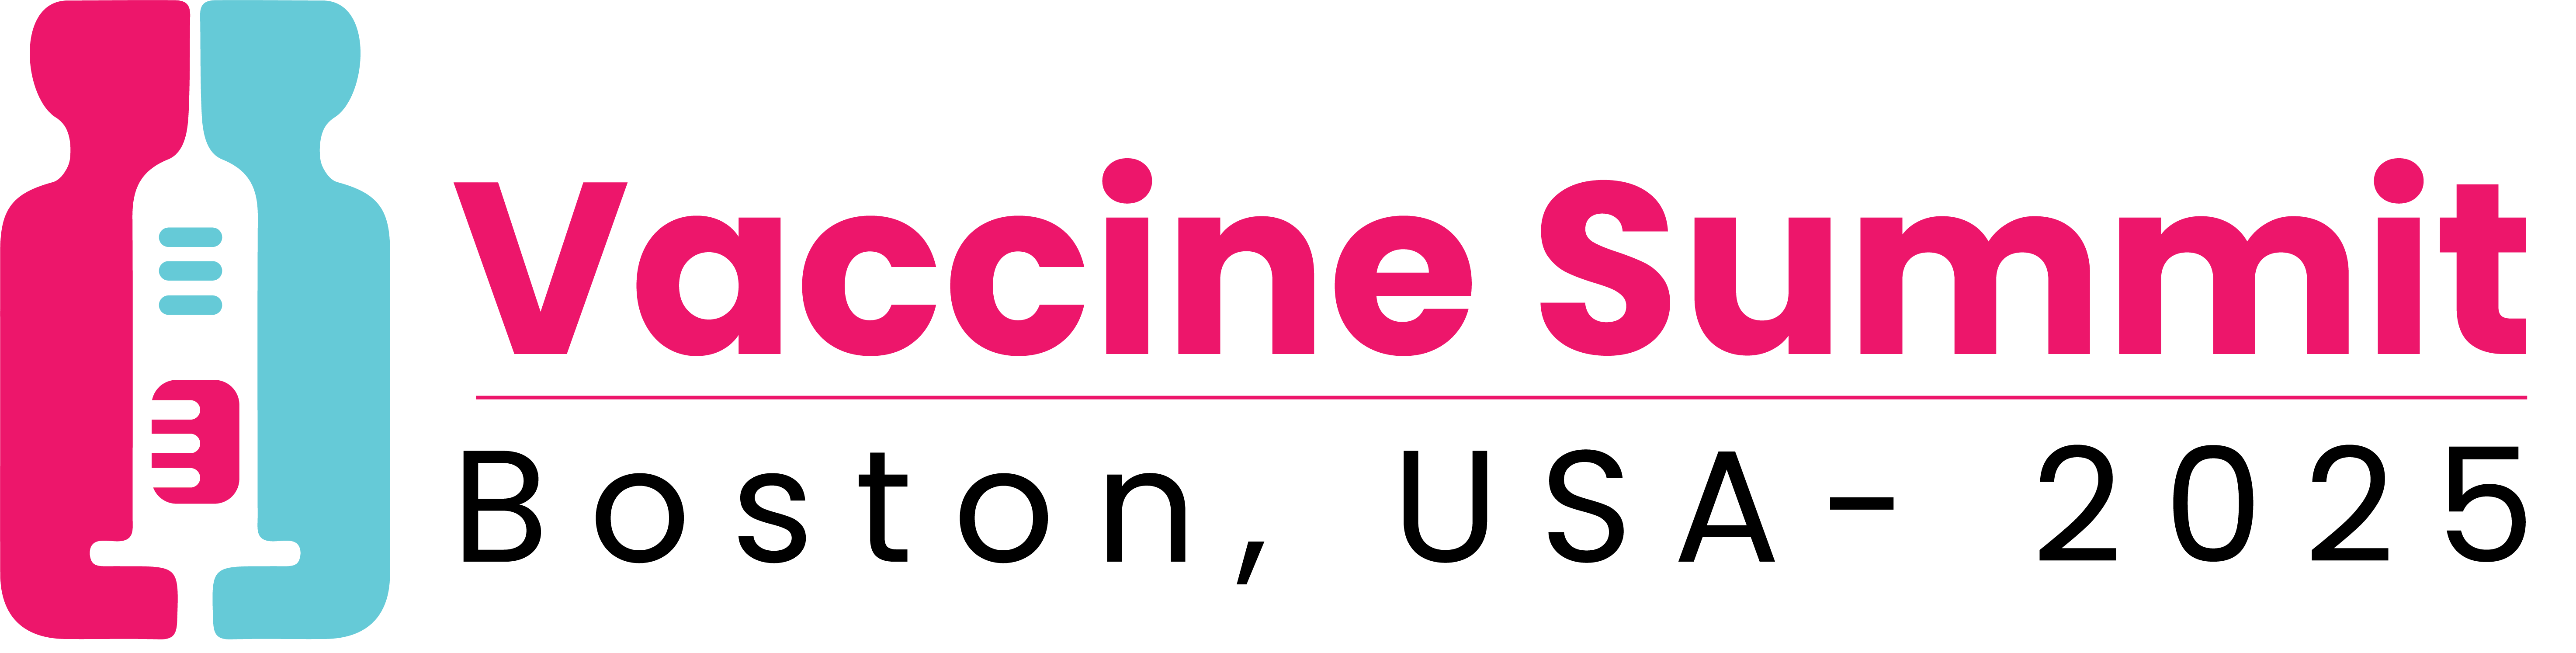 Vaccine Logo